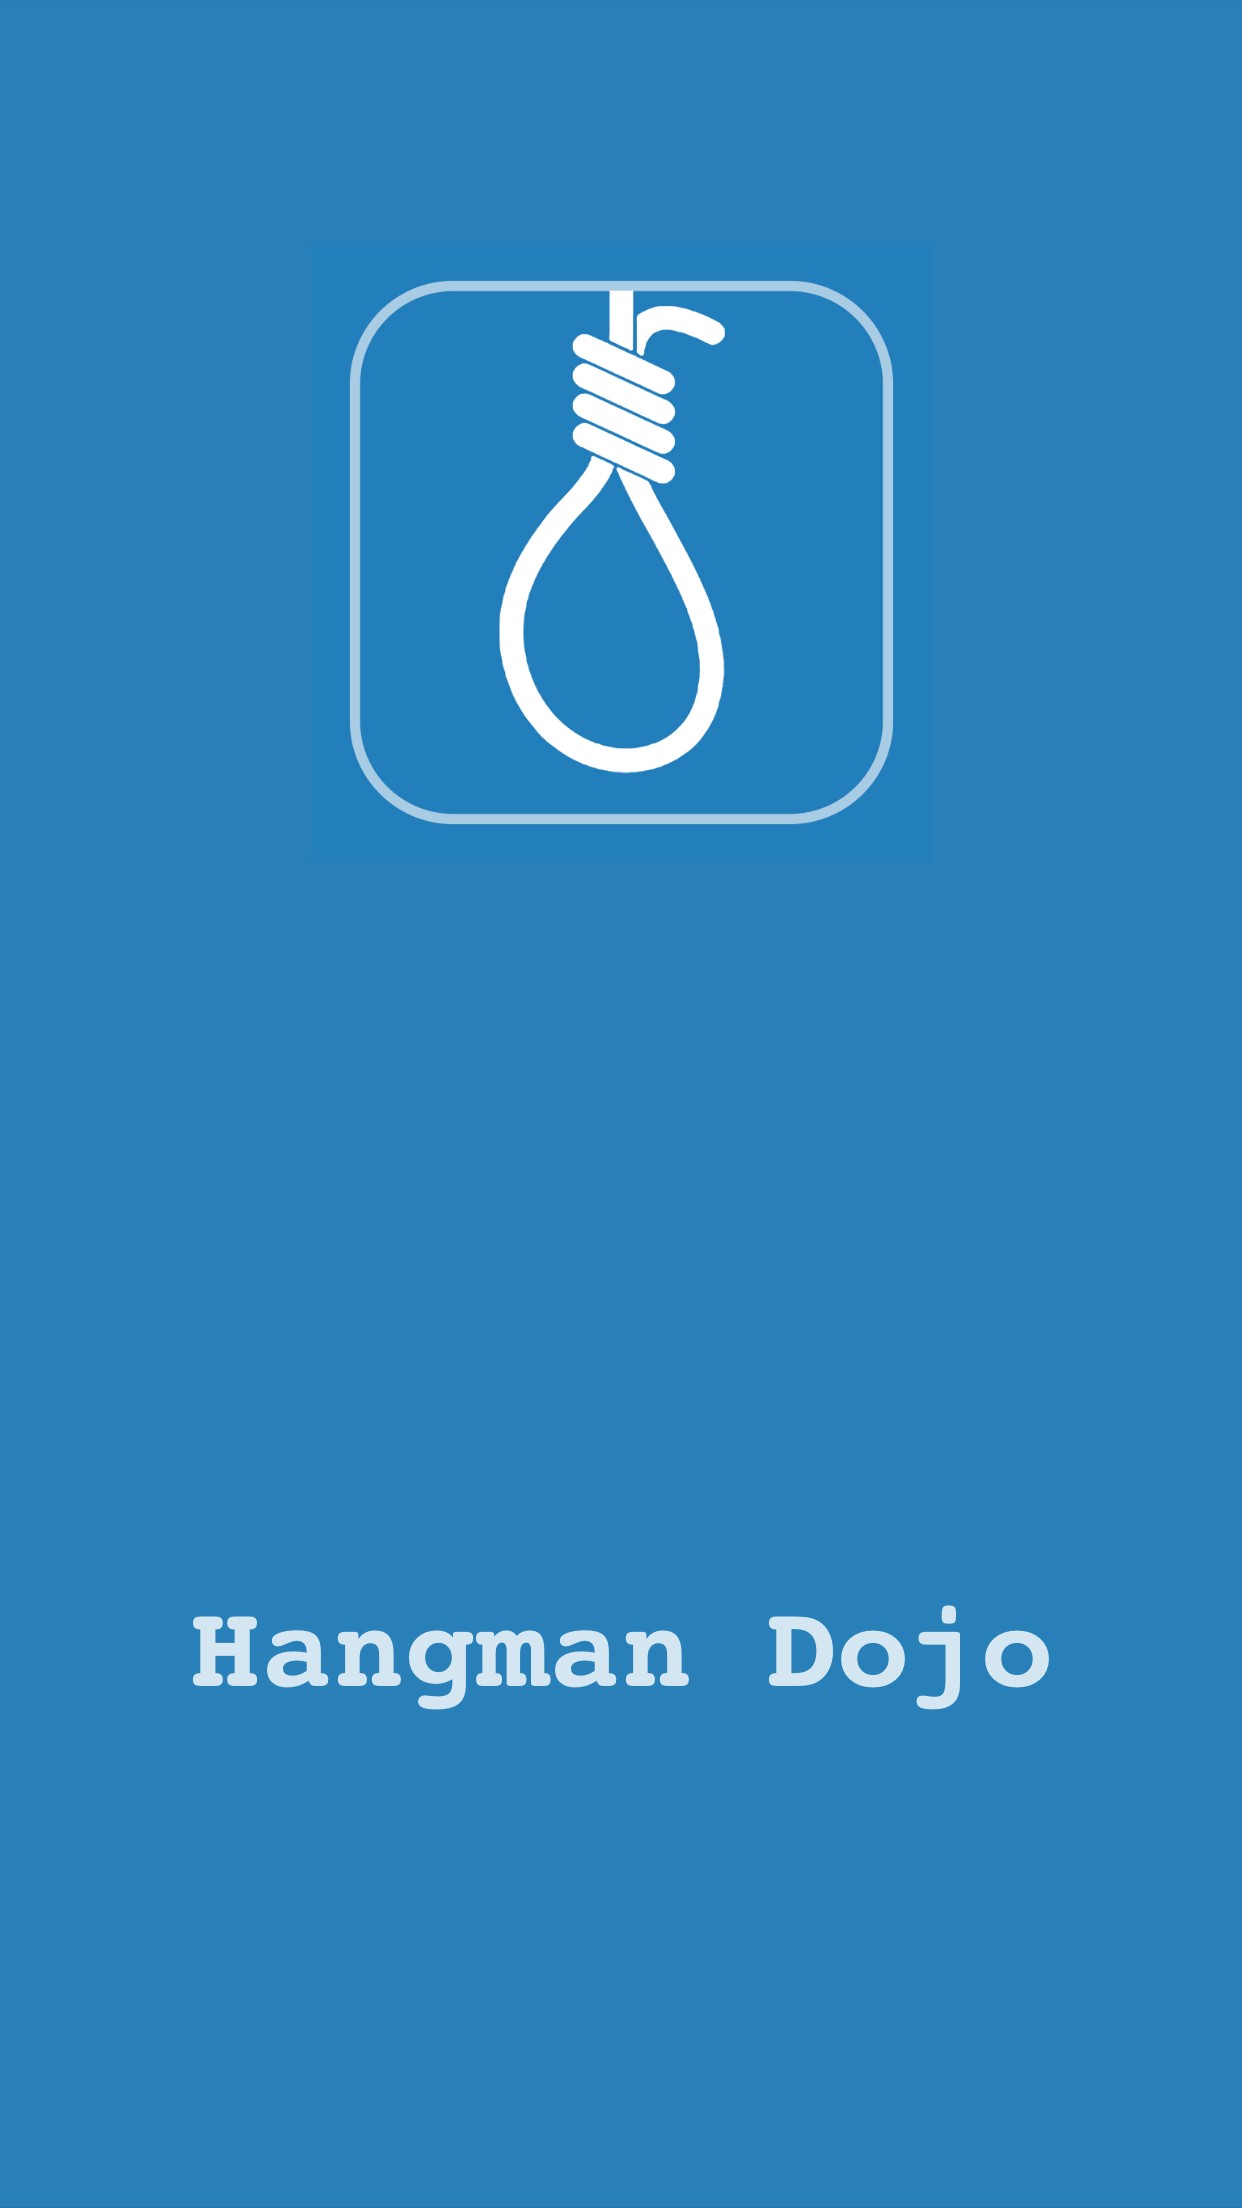 Hangman Dojo